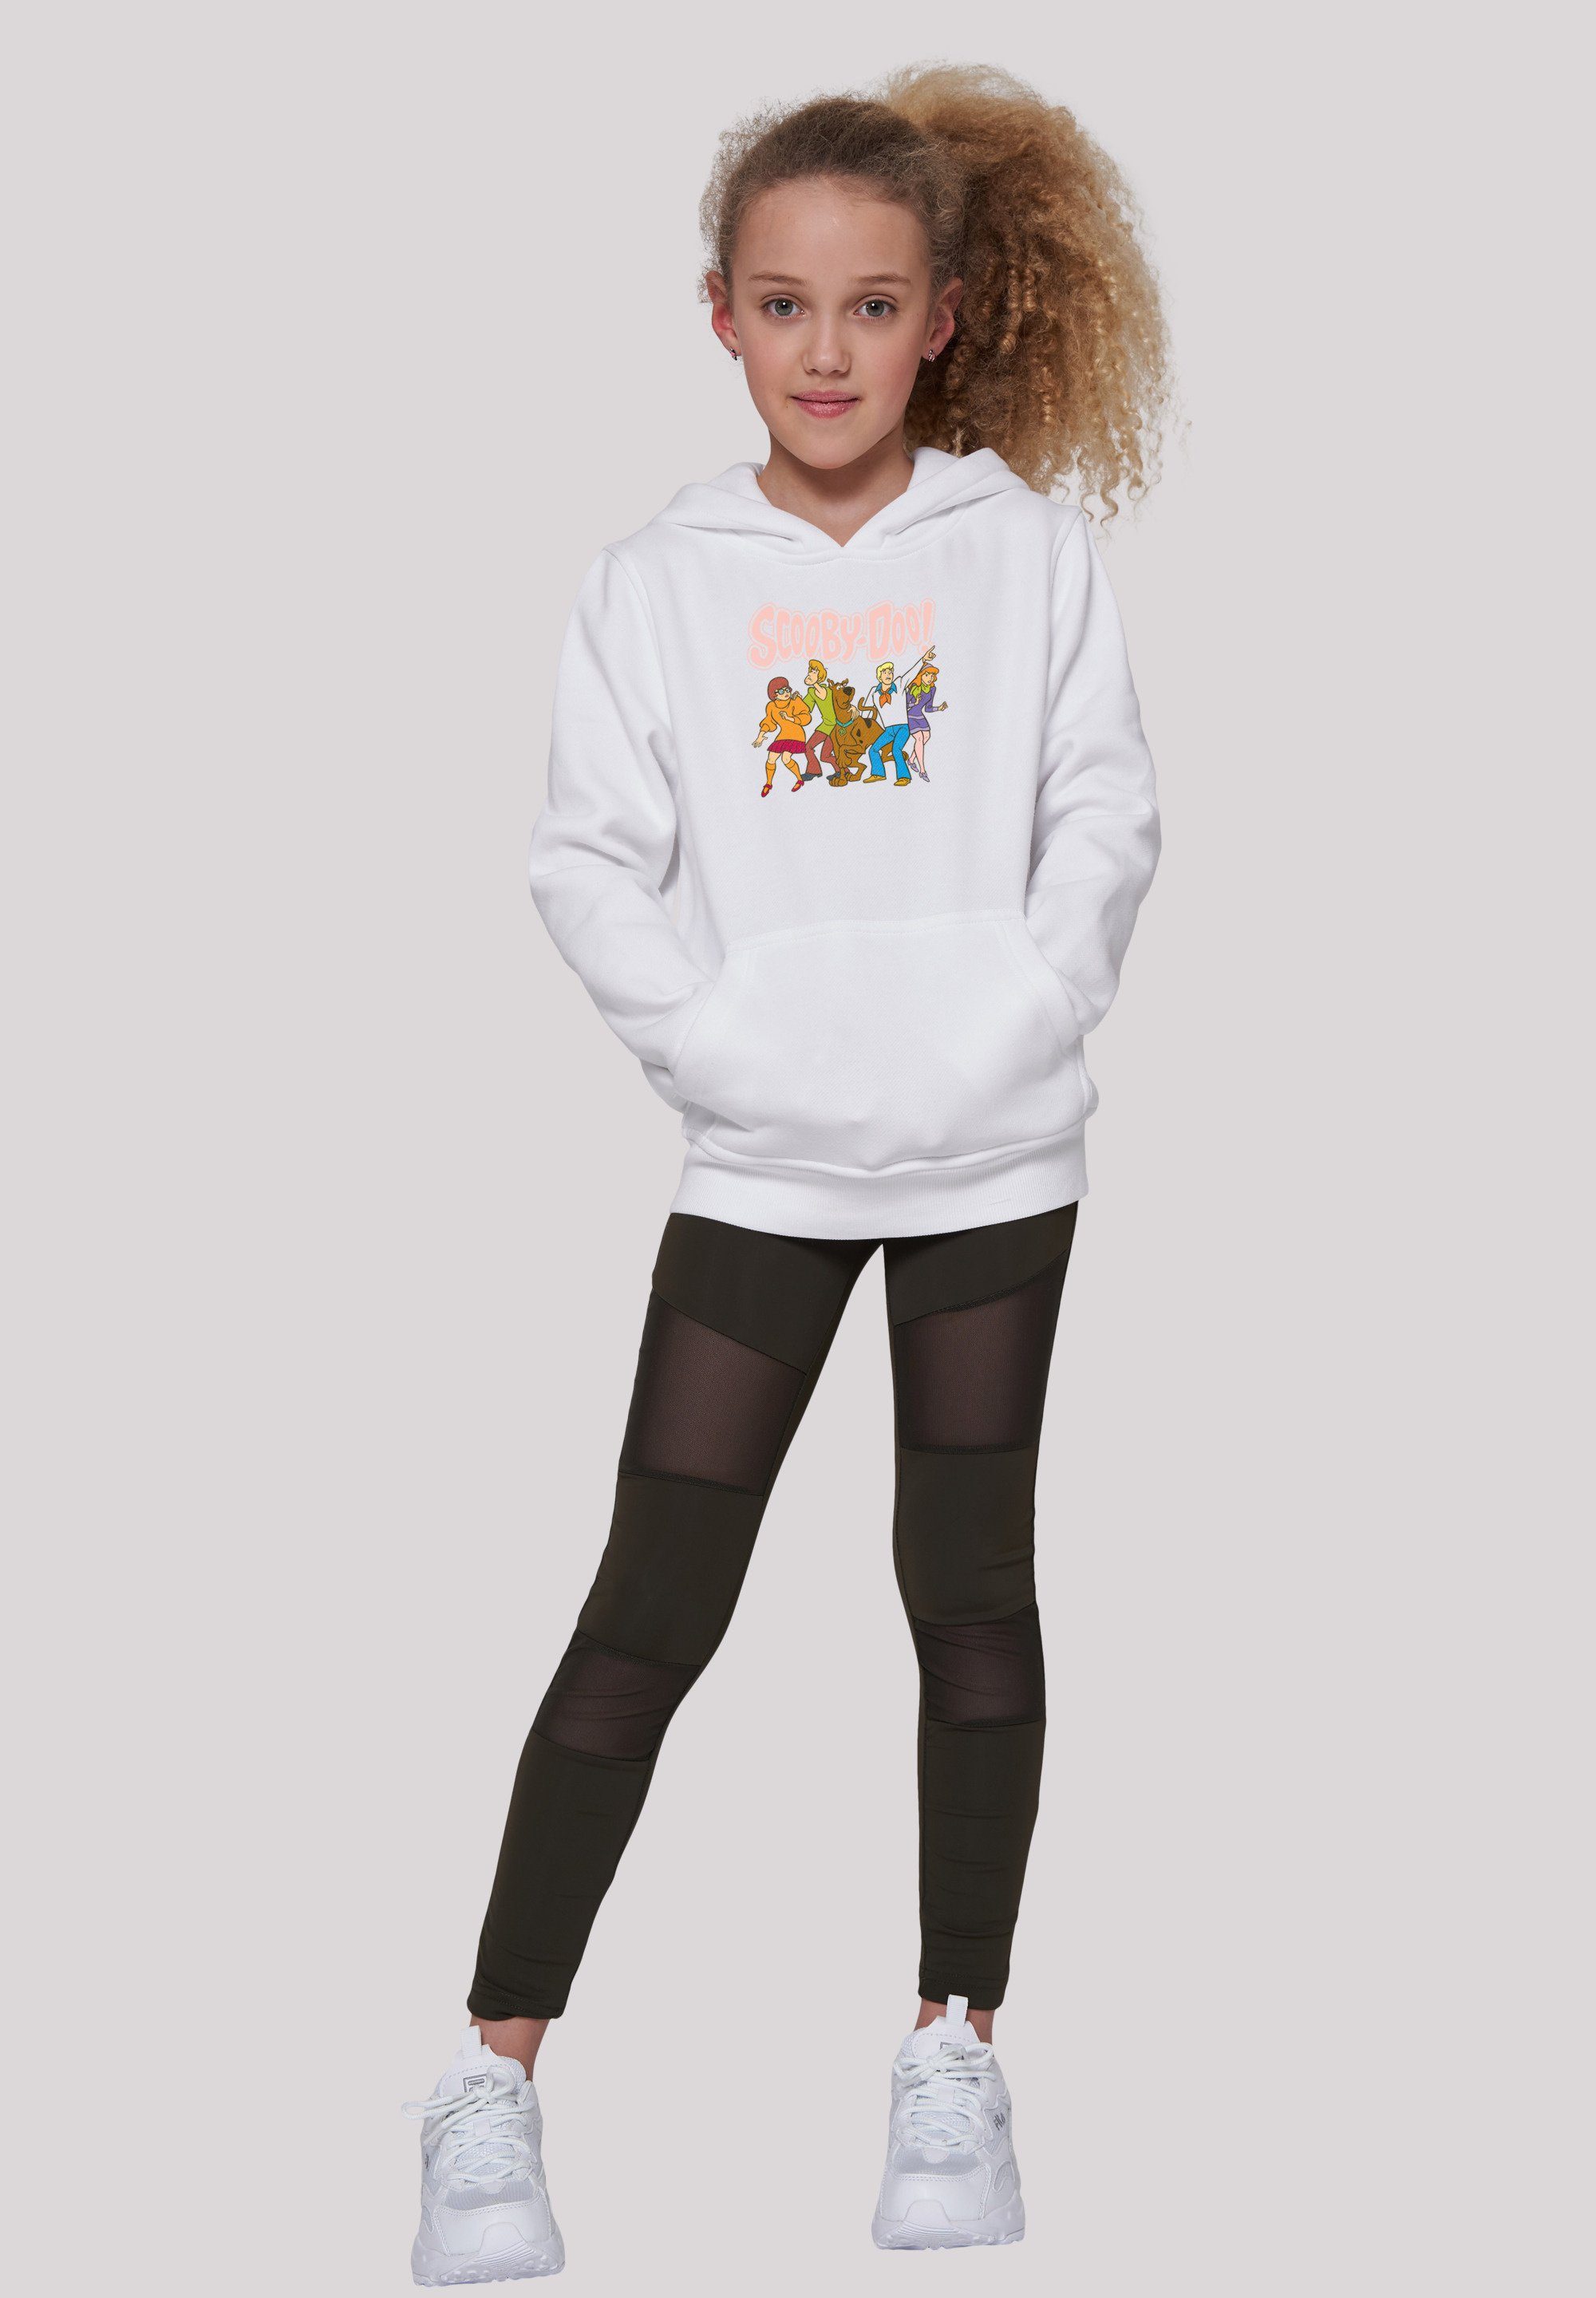 Group Kinder,Premium F4NT4STIC Merch,Jungen,Mädchen,Bedruckt Classic Sweatshirt weiß Unisex Doo Scooby